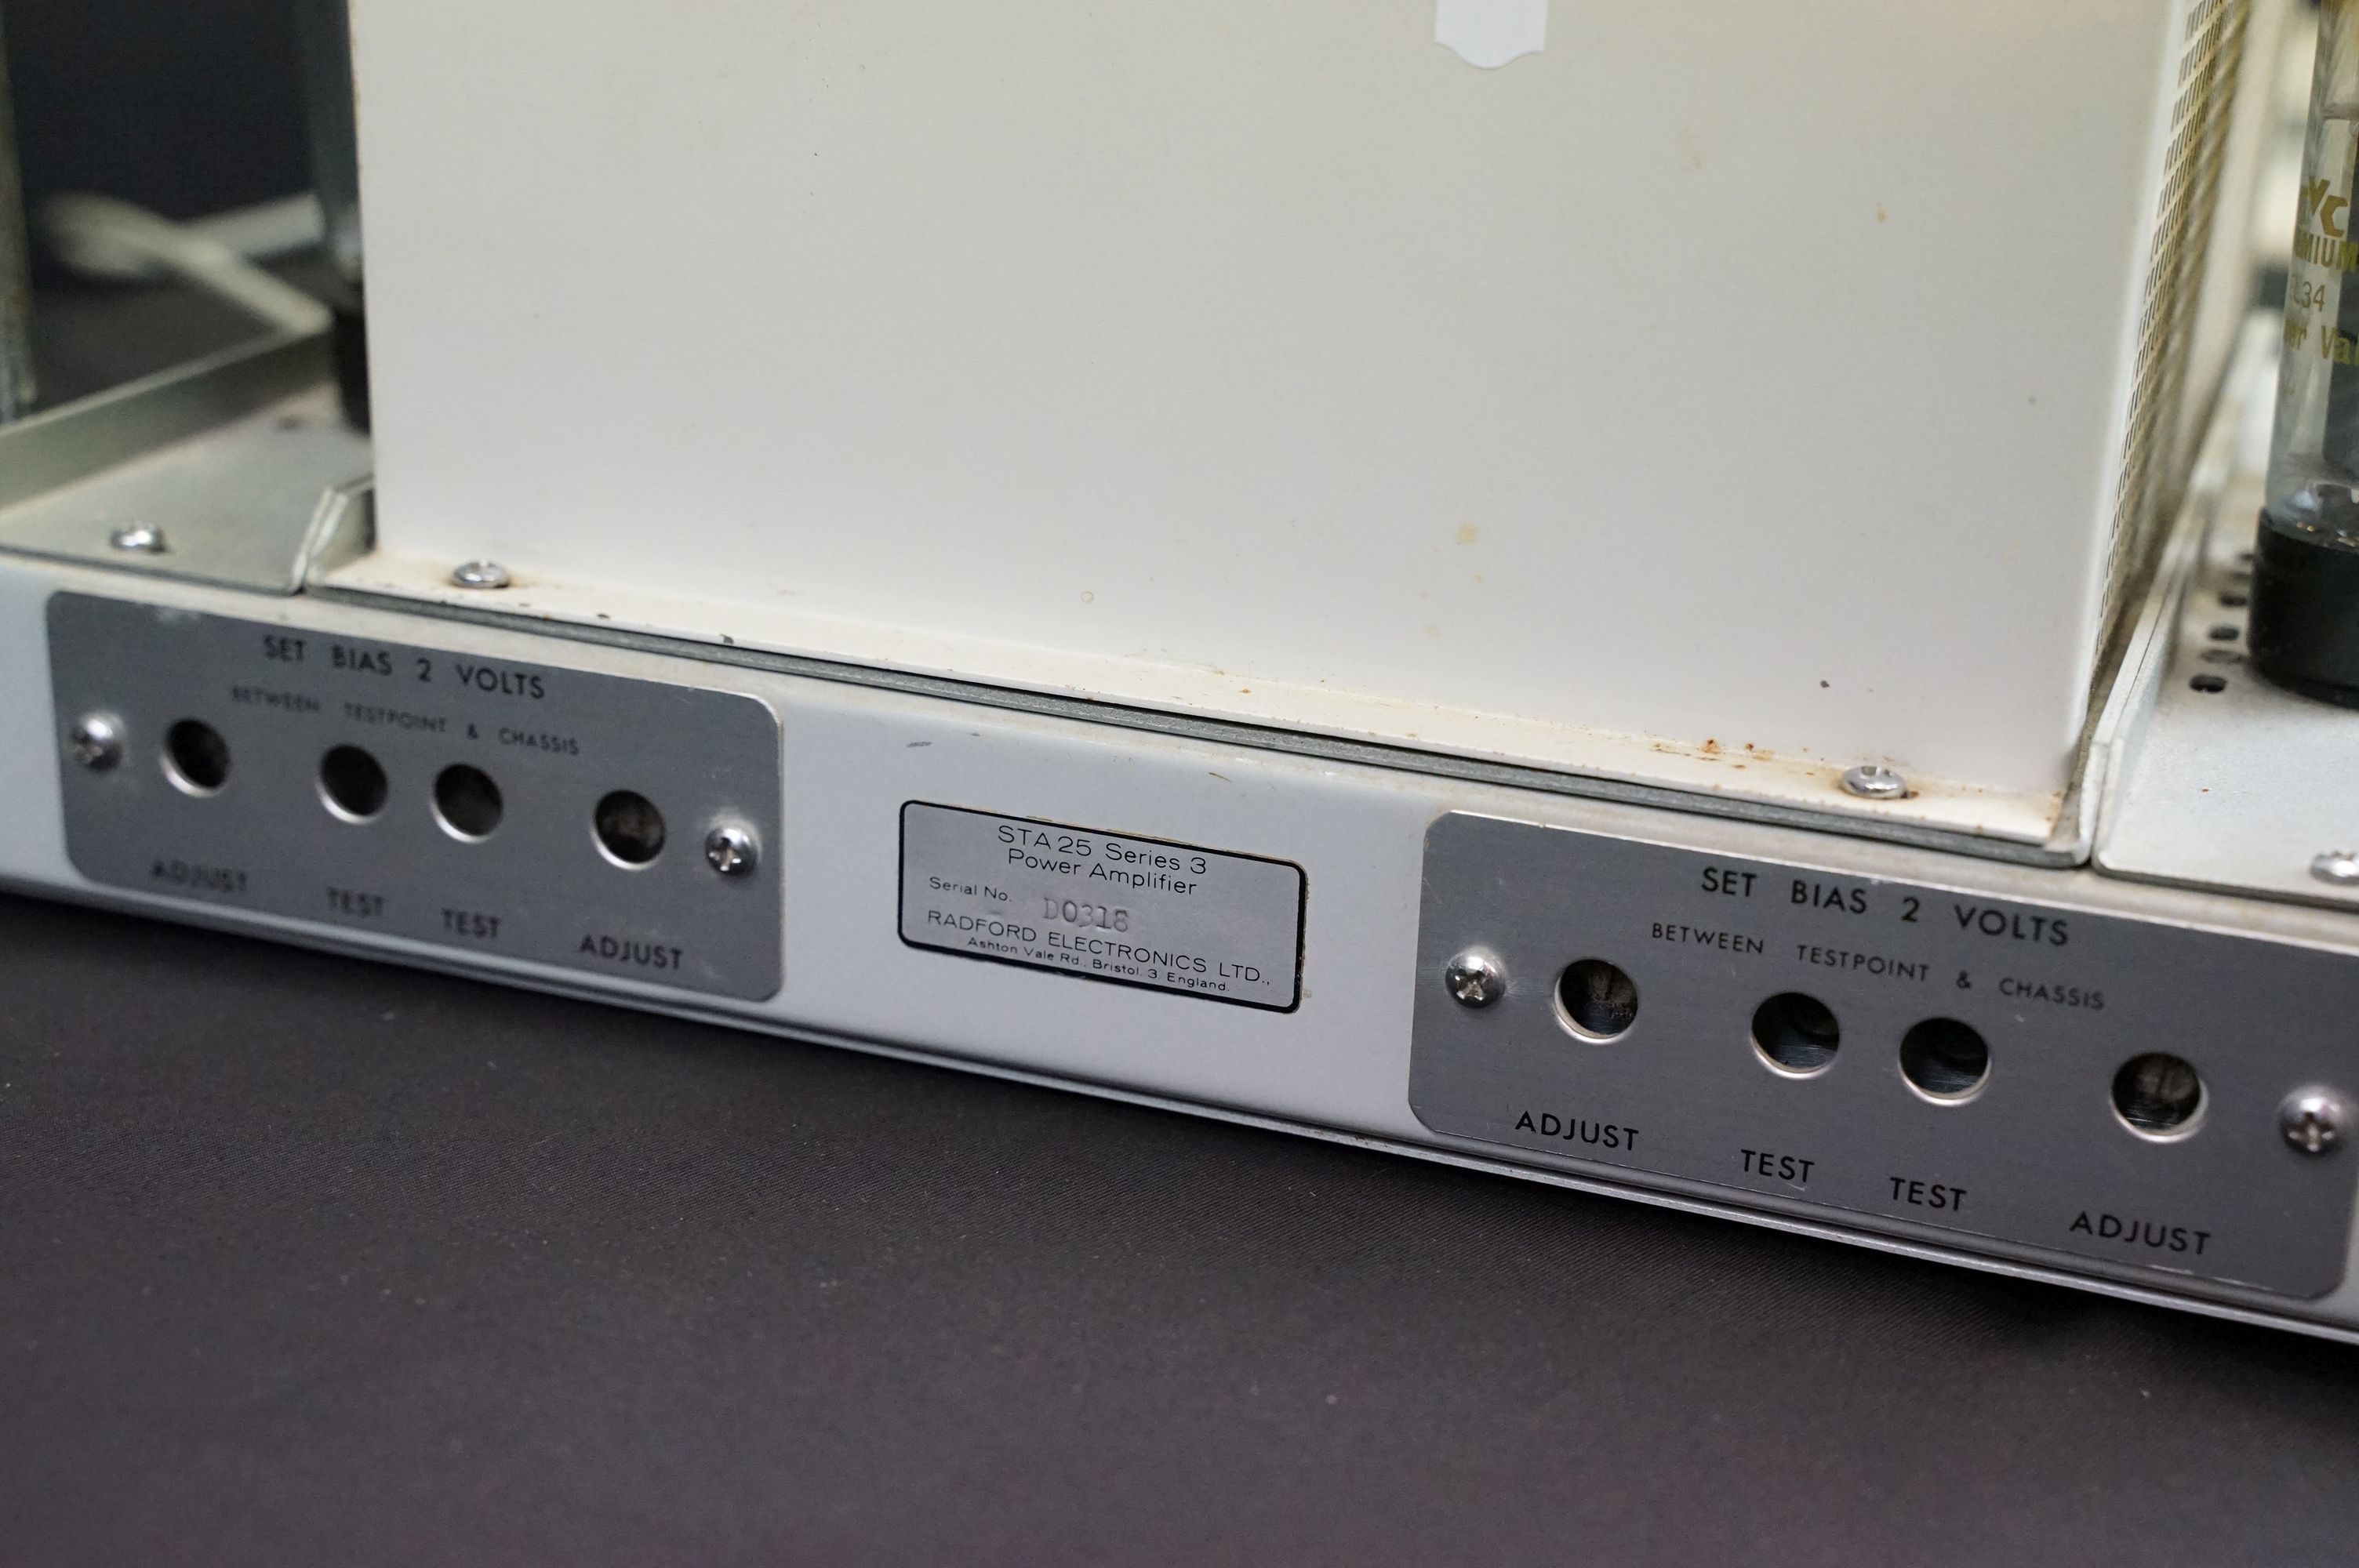 Stereo equipment - Radford STA 25 Series 3 Power Amplifier, Radford SC22 Control Unit, Radford FMT.1 - Image 8 of 18